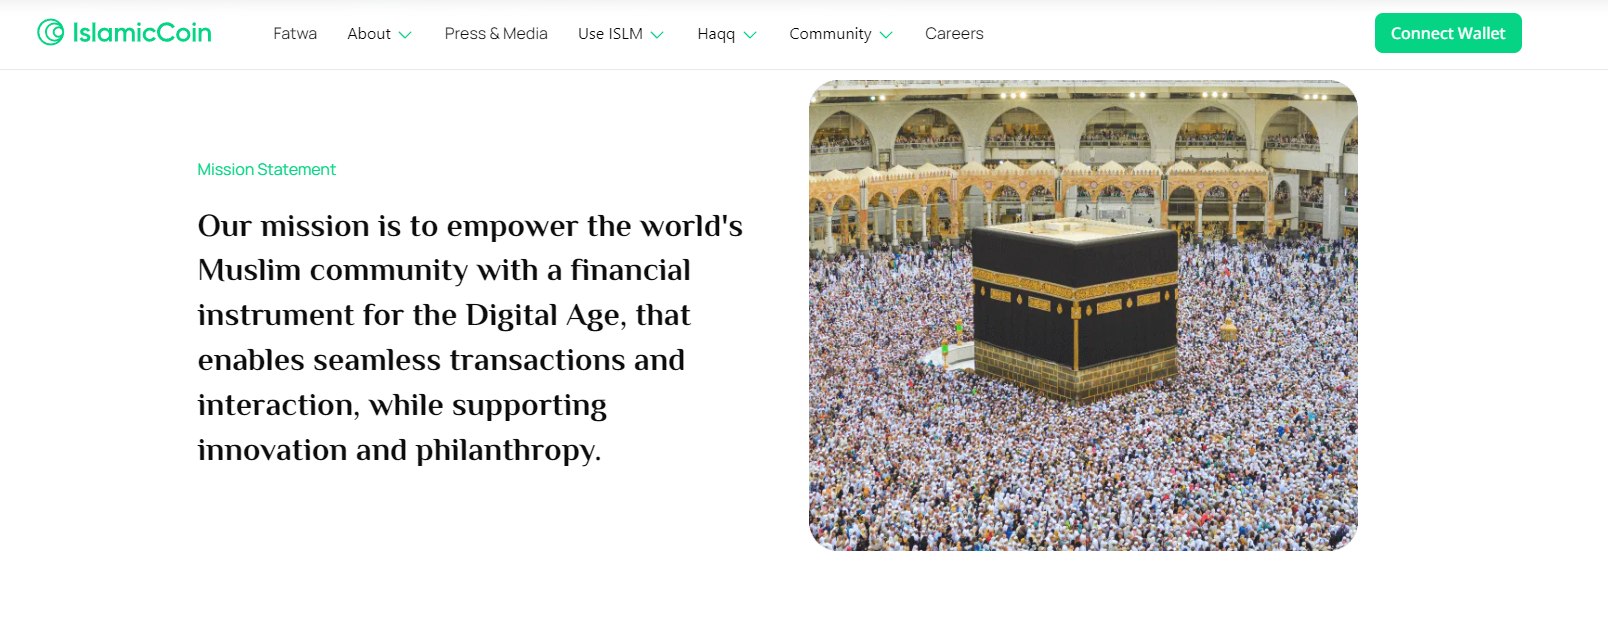 <i>ข้อมูลจากหน้าเว็บไซต์หลัก Islamic Coin<br>รูปภาพ: www.IslamicCoin.net</i>